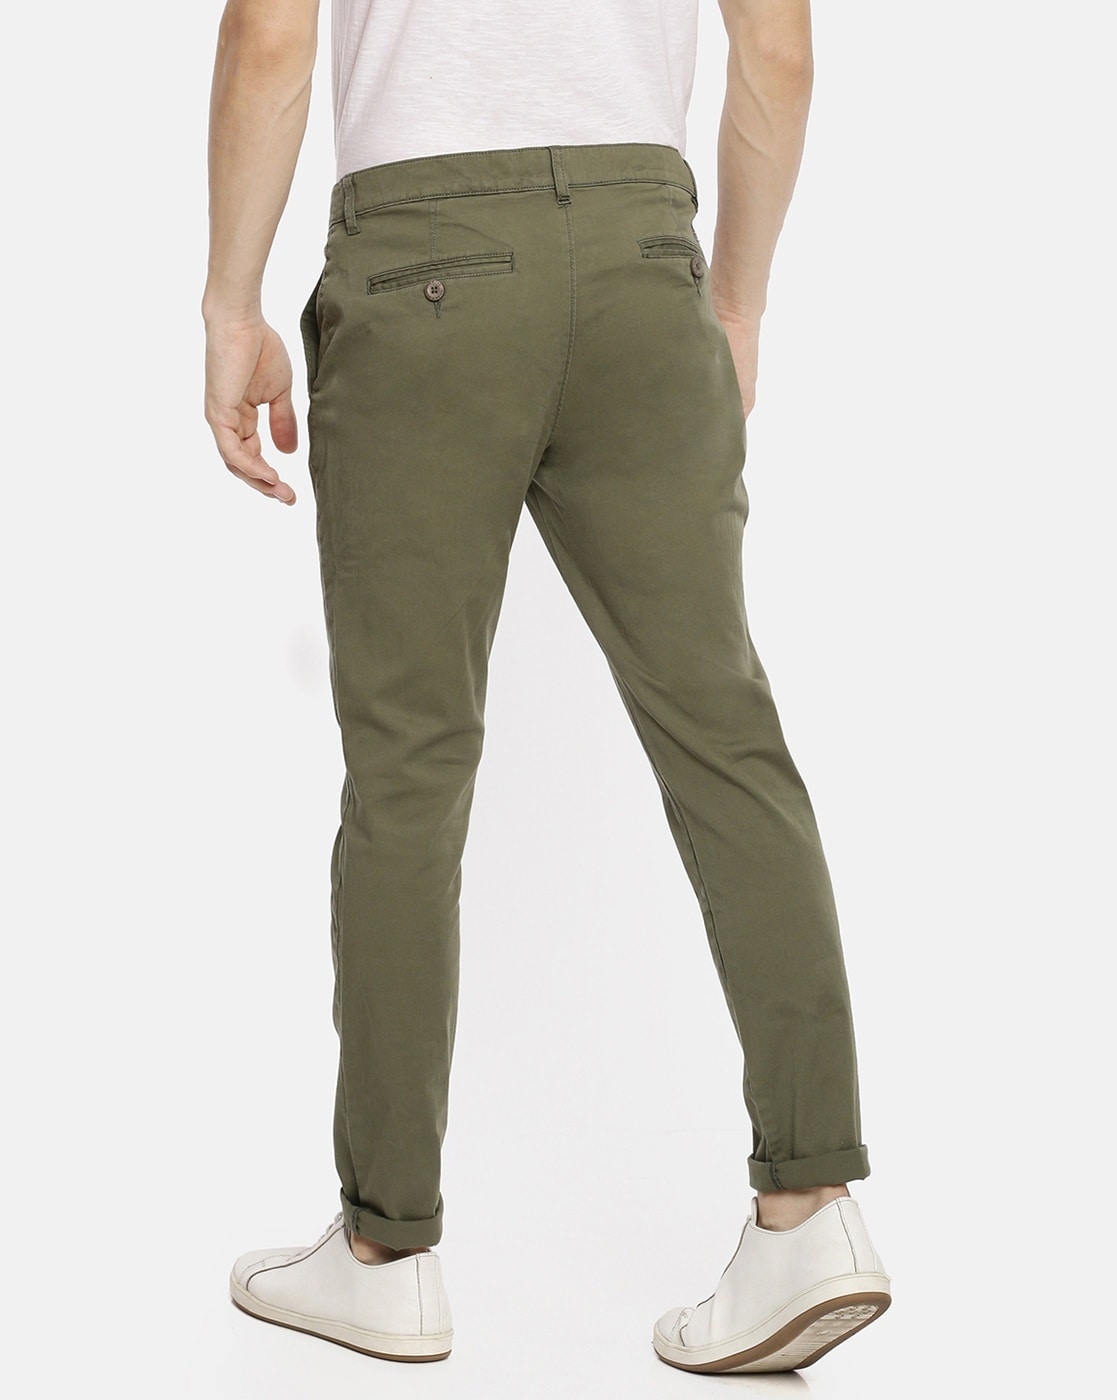 Buy Men Work Pants Cotton Gurkha Trouser Regular Fit Double Online in India   Etsy